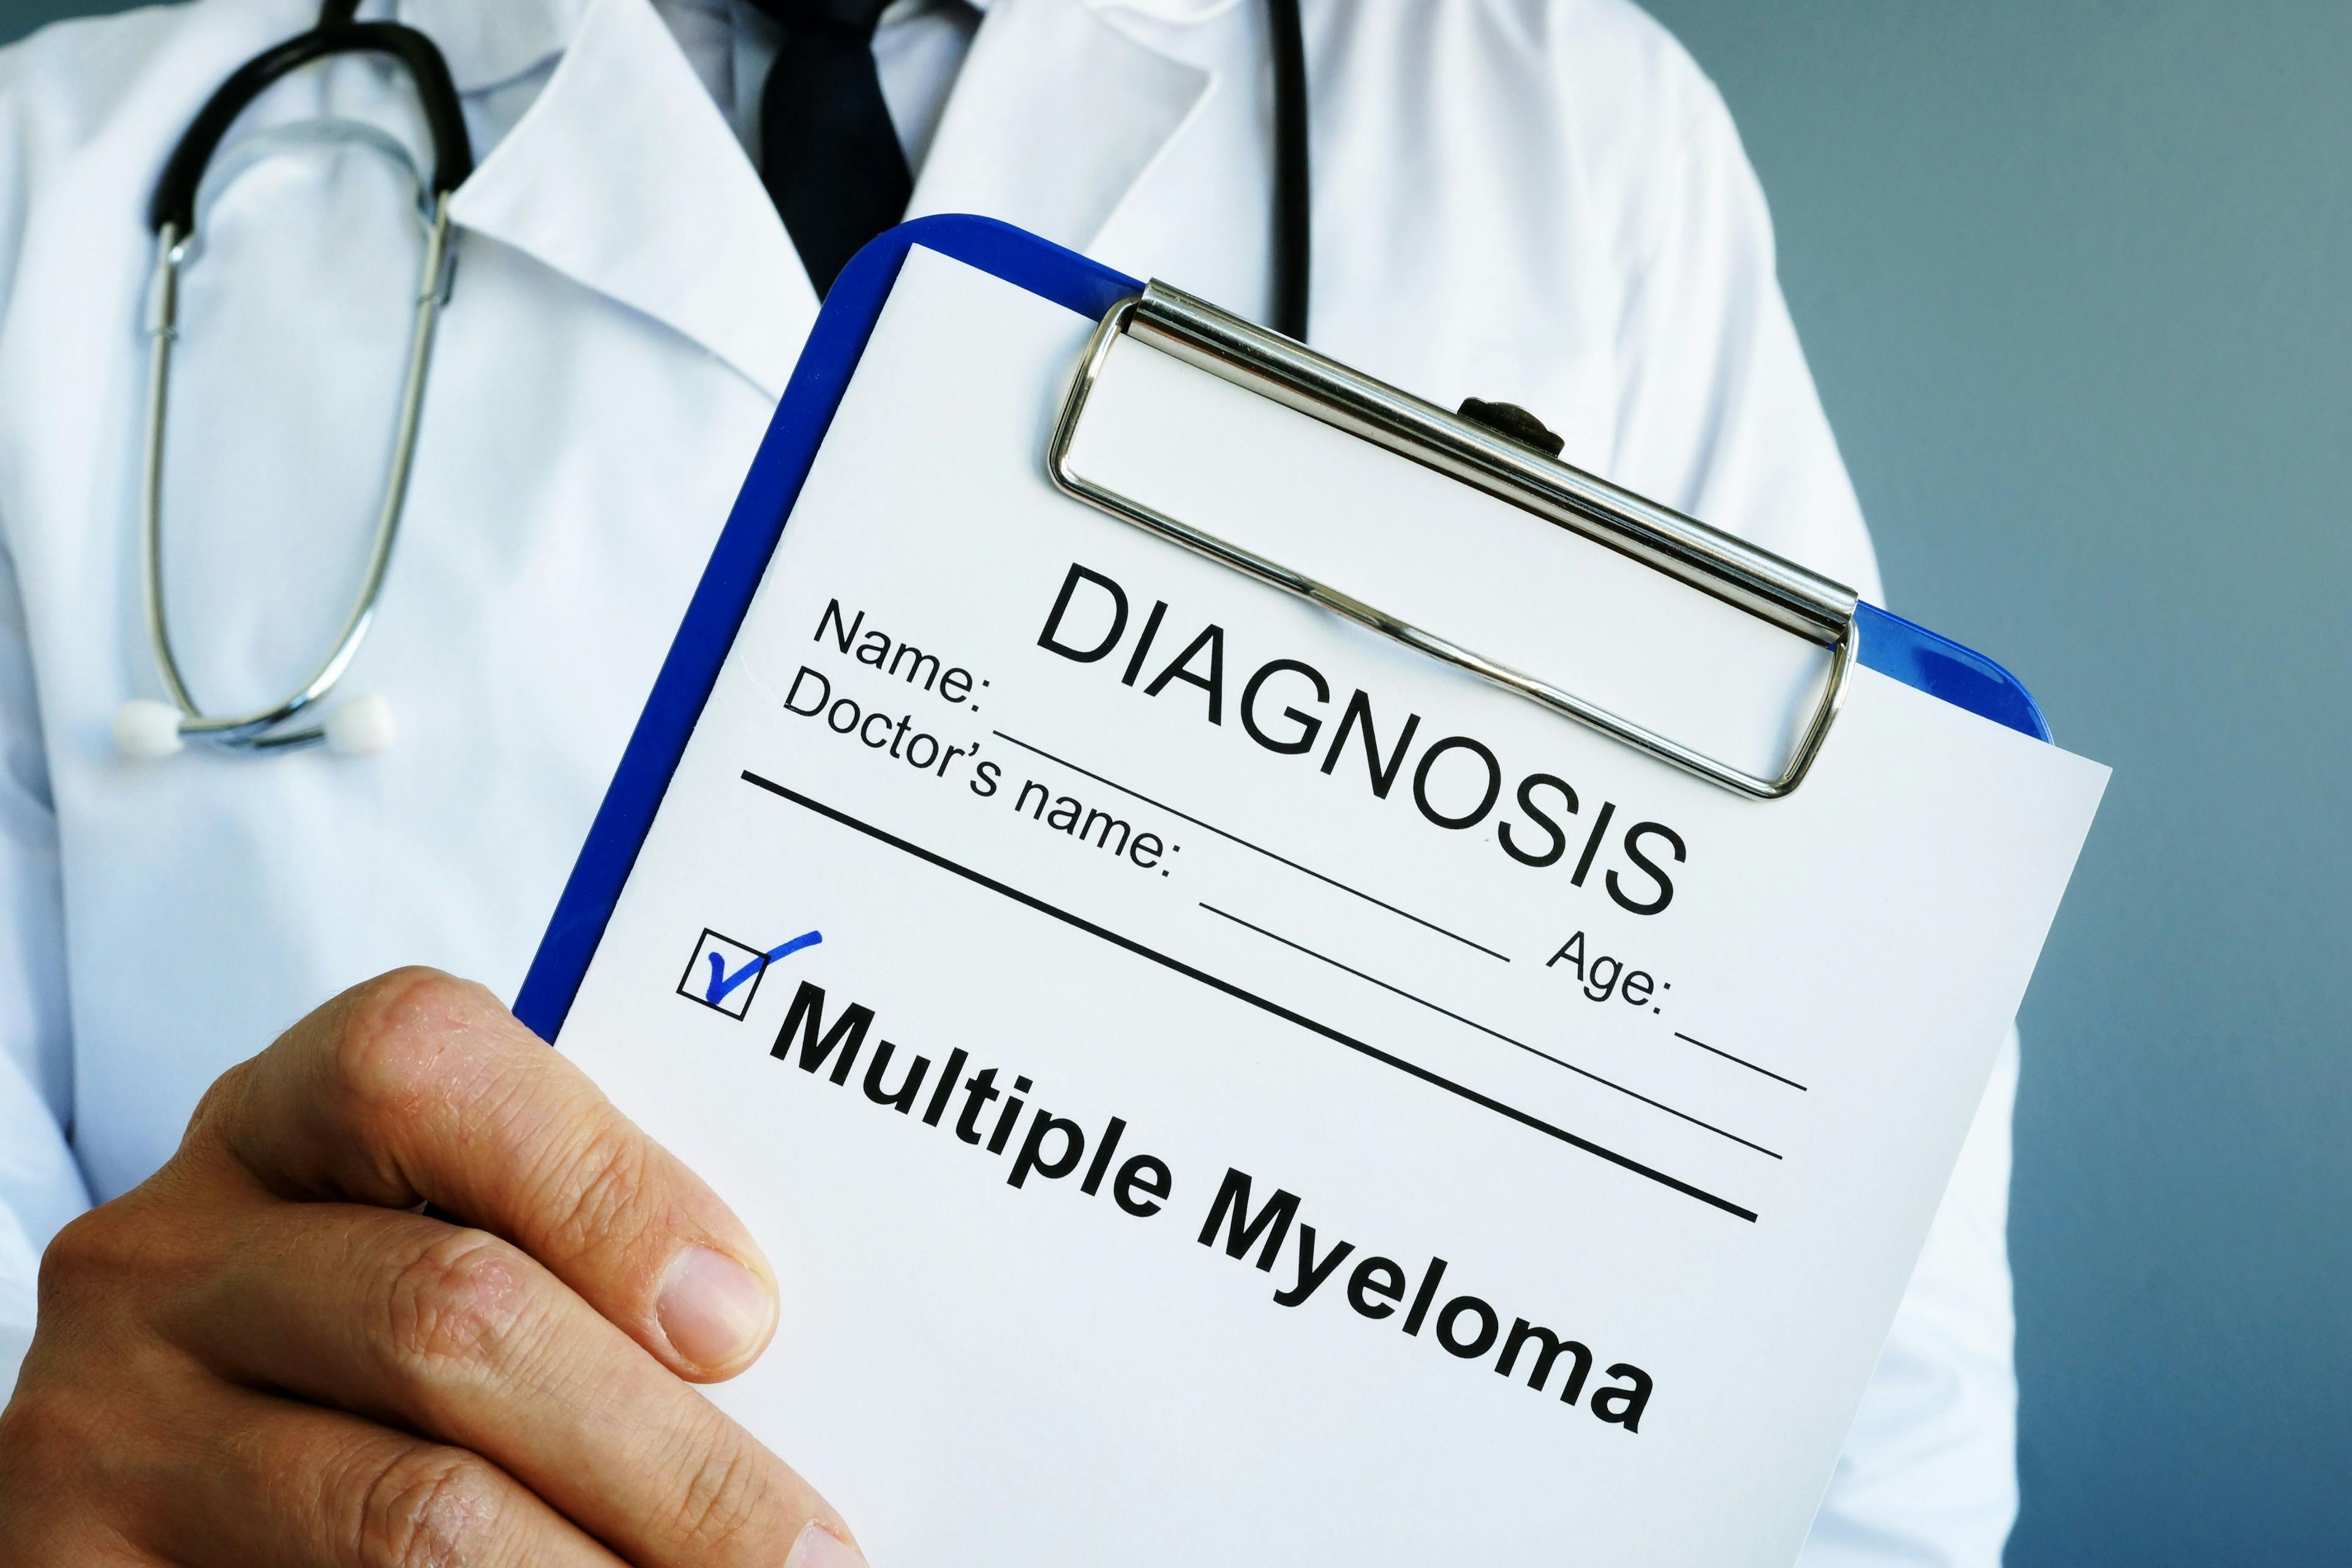 Doctor holding diagnosis of multiple myeloma | Image credit: Vitalii Vodolazskyi - stock.adobe.com